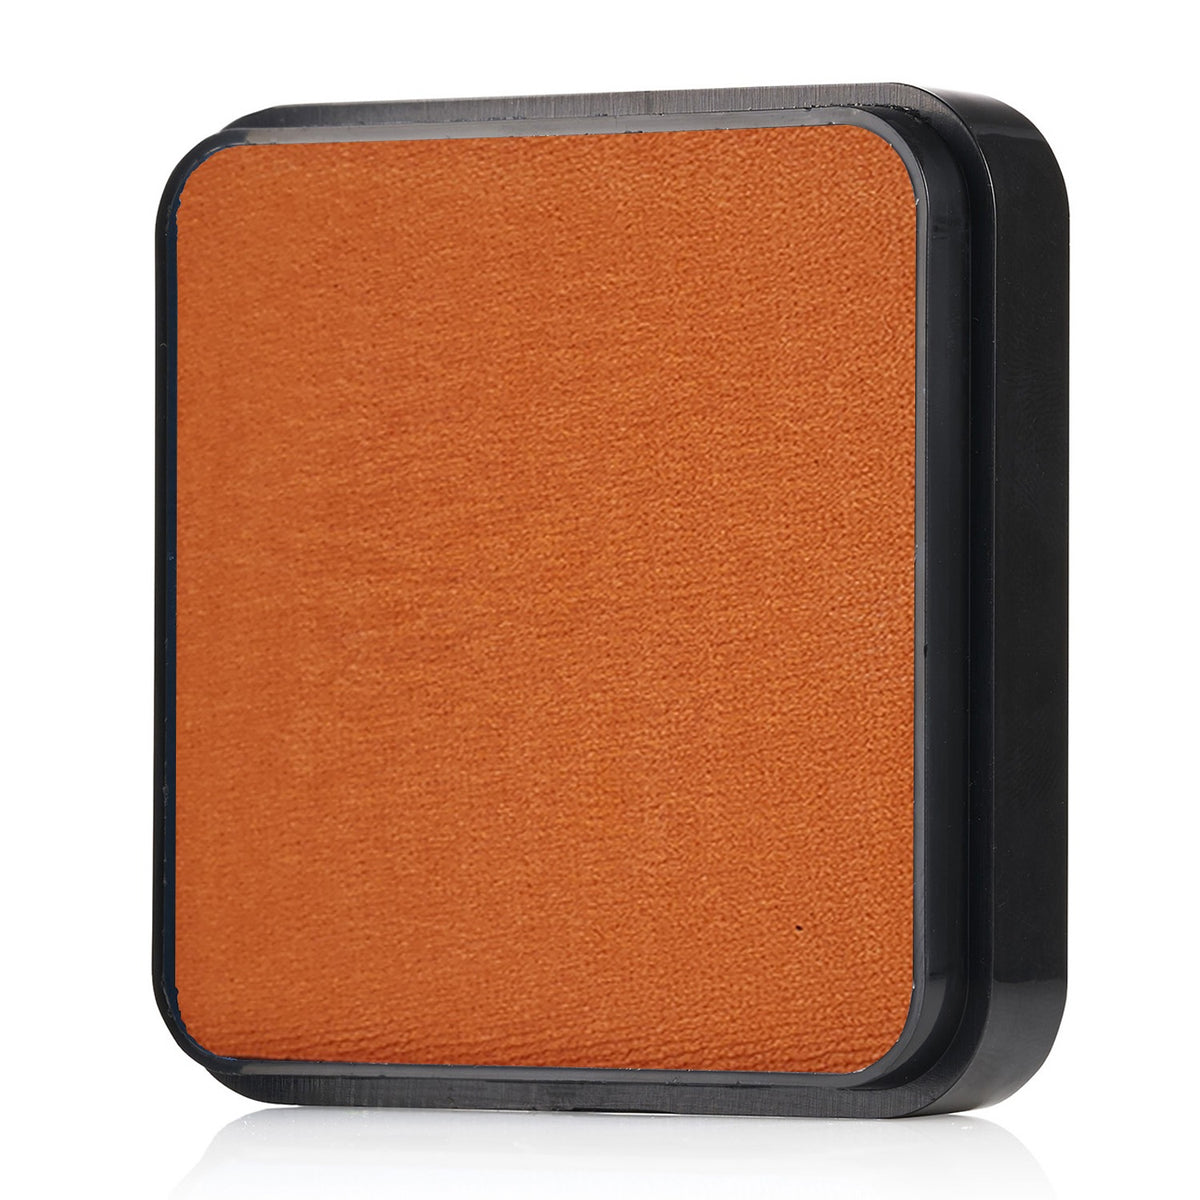 Kraze FX Face Paint - Metallic Orange (25 gm)